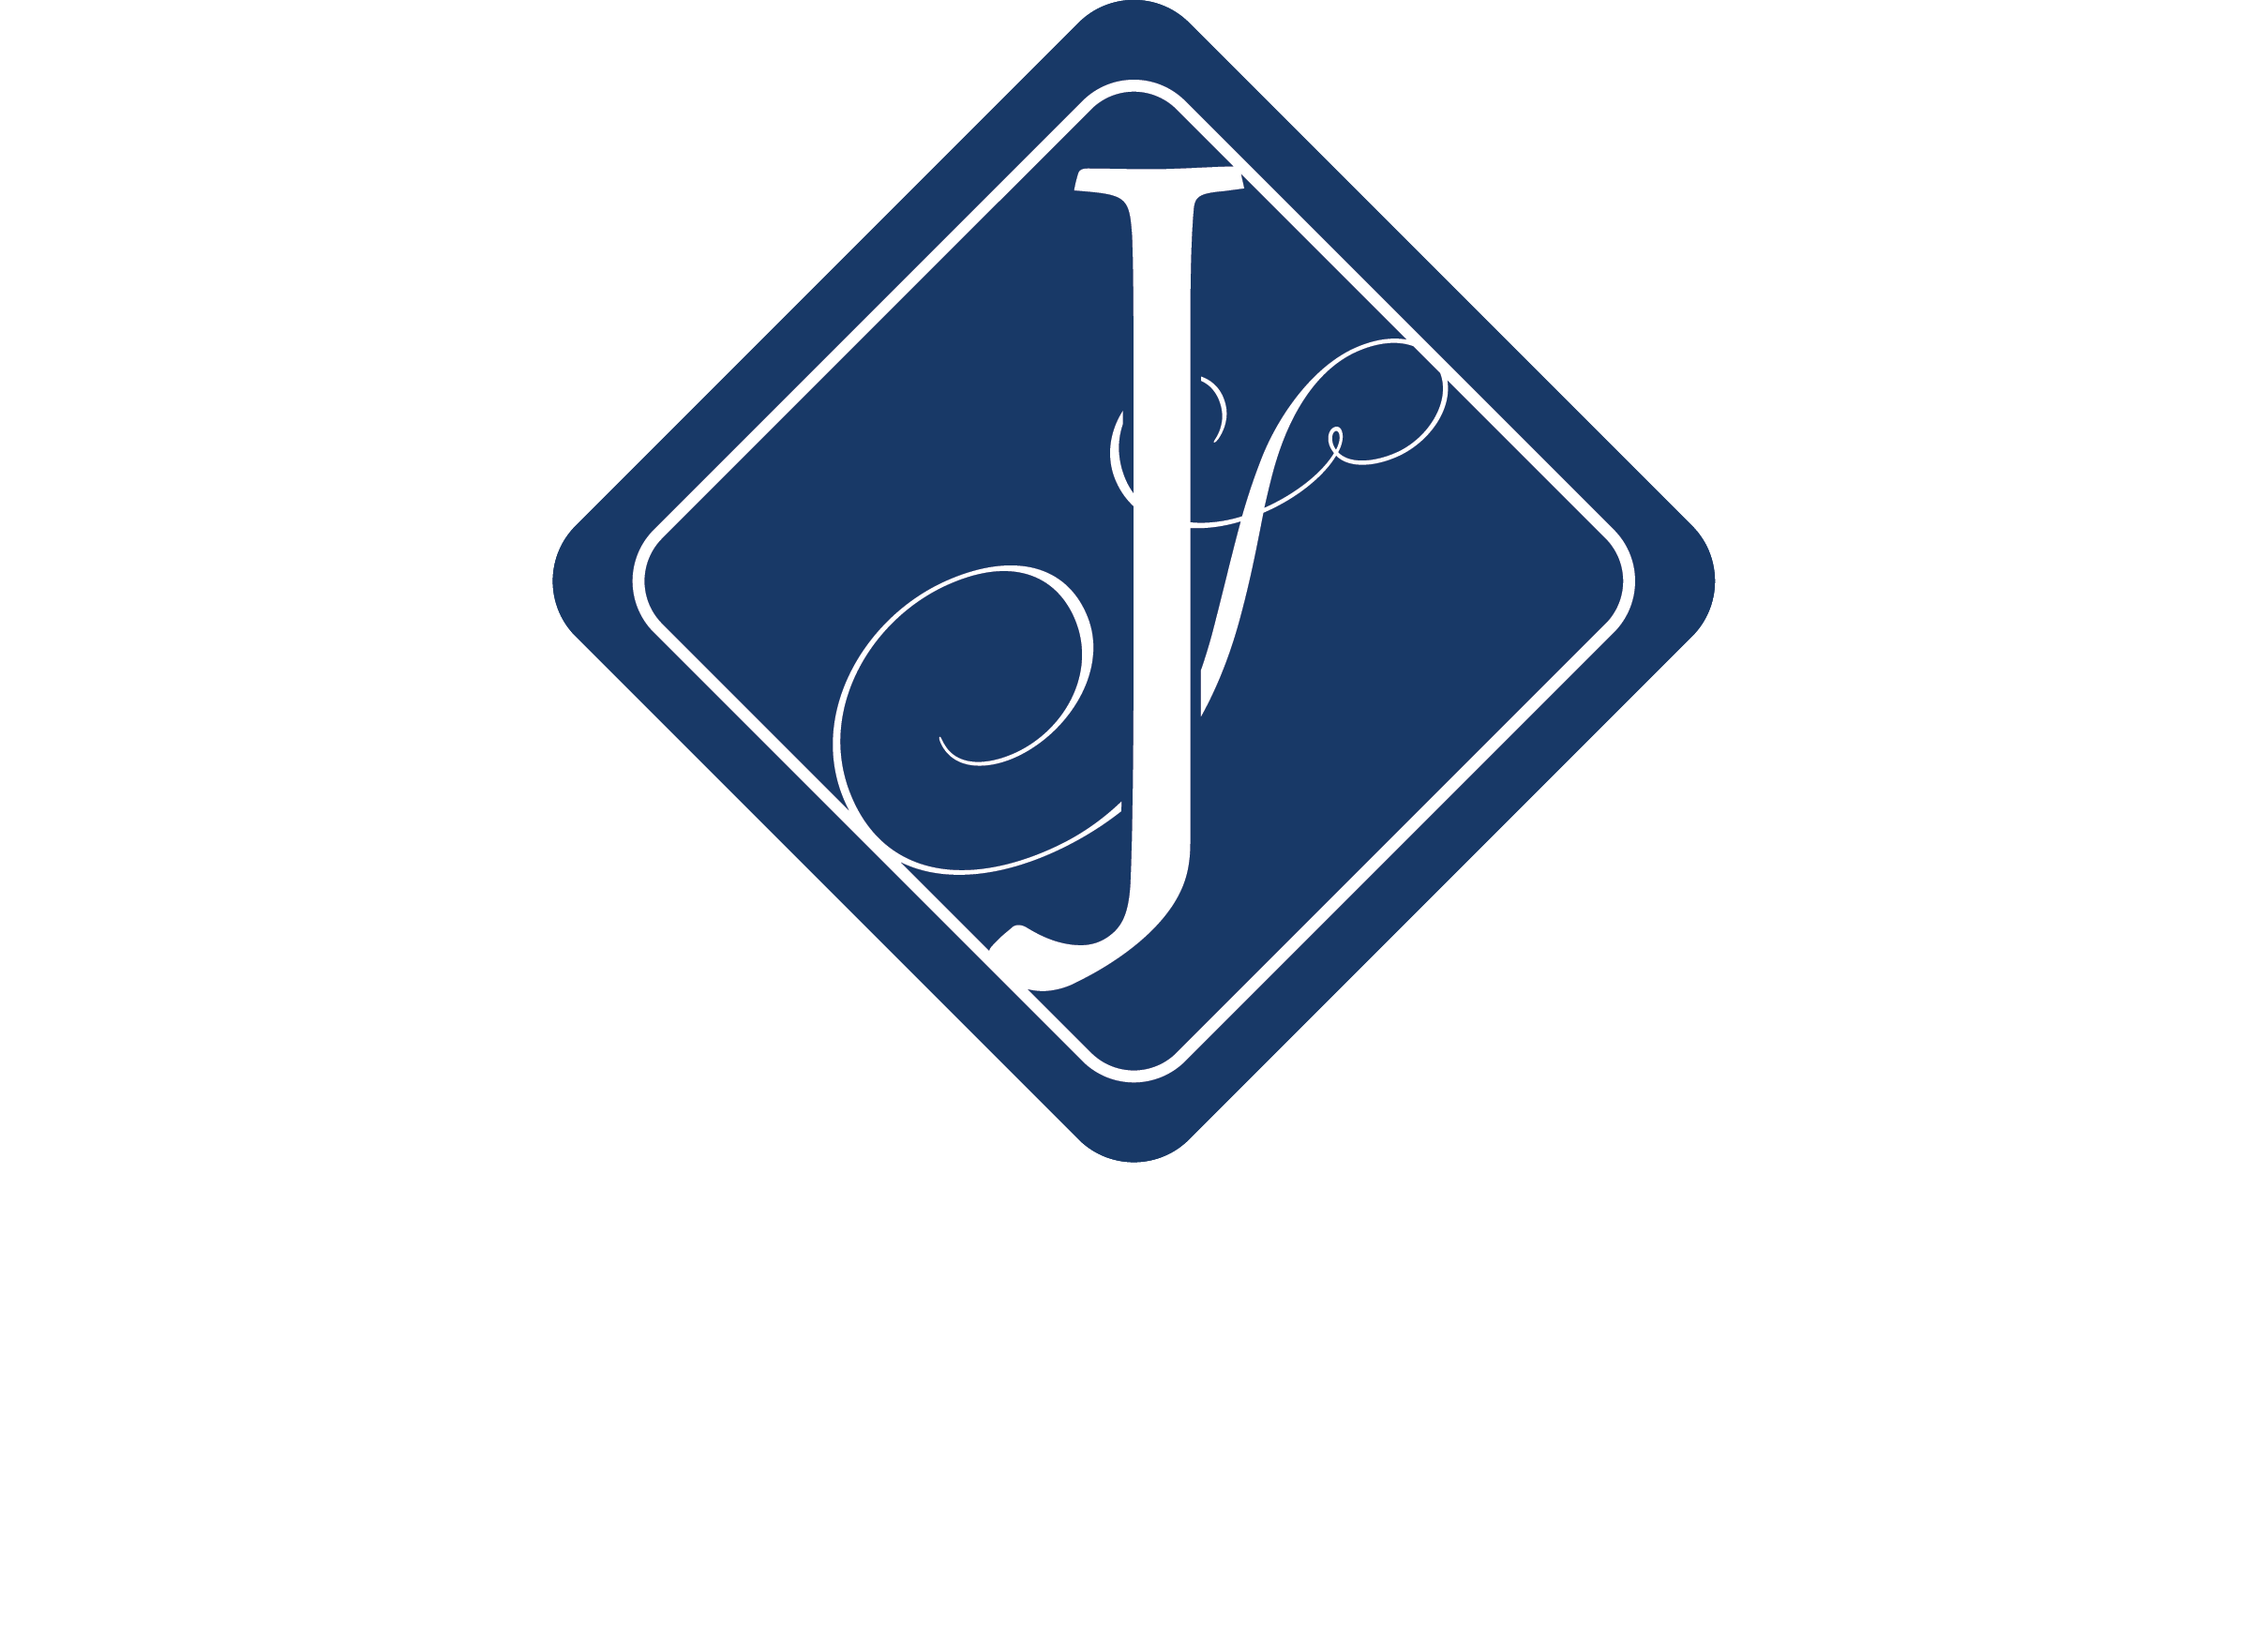 James Hotel Logo - St James Hotel Logo (2419x1734)